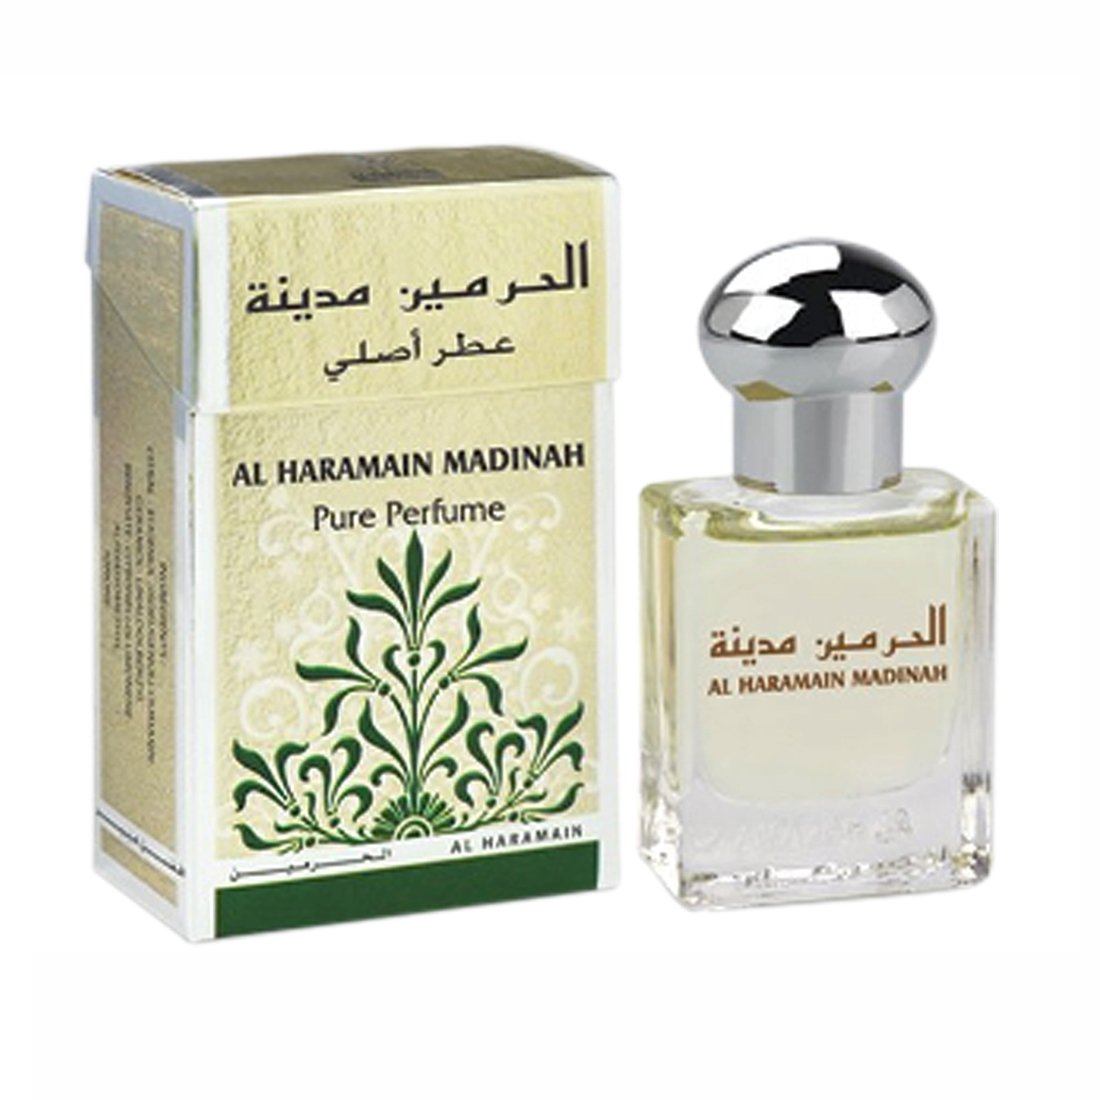 Al Haramain Madina Fragrance Pure Original Roll on Perfume Oil (Attar) - 15 ml